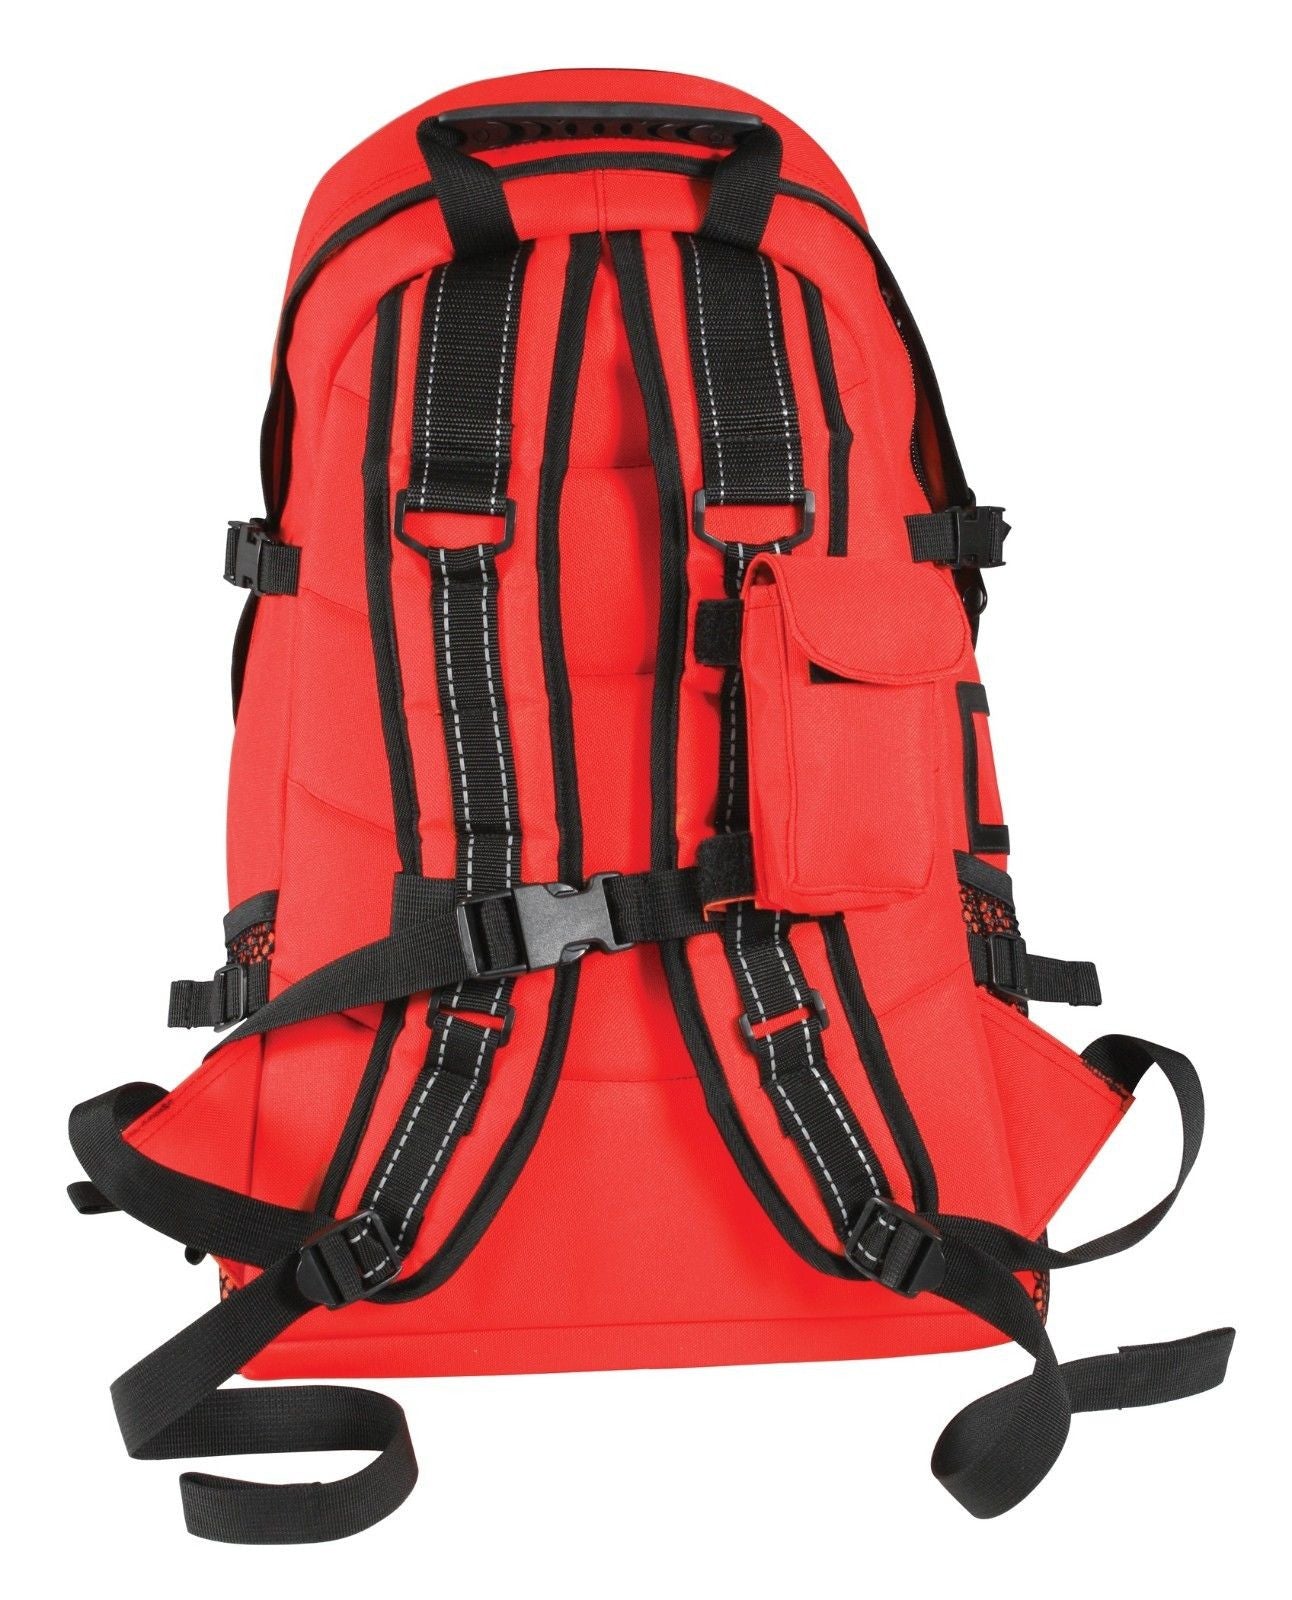 EMS Medic Trauma Backpack Gear Bag - Red First Aid Ambulance Emergency Back Pack